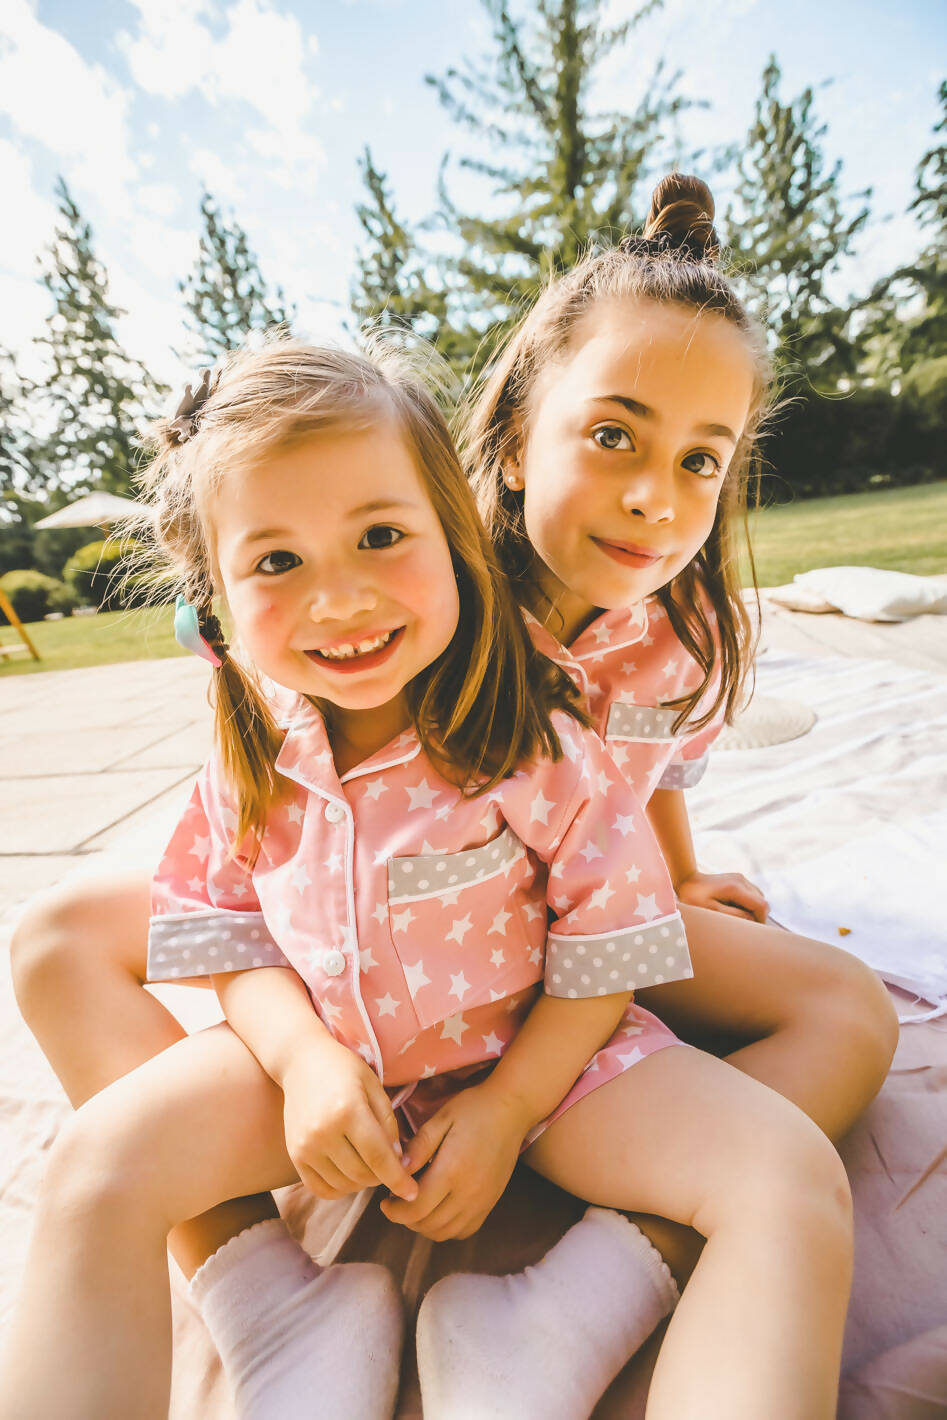 Pijama Infantil Estrellas Rosa y puntos grises